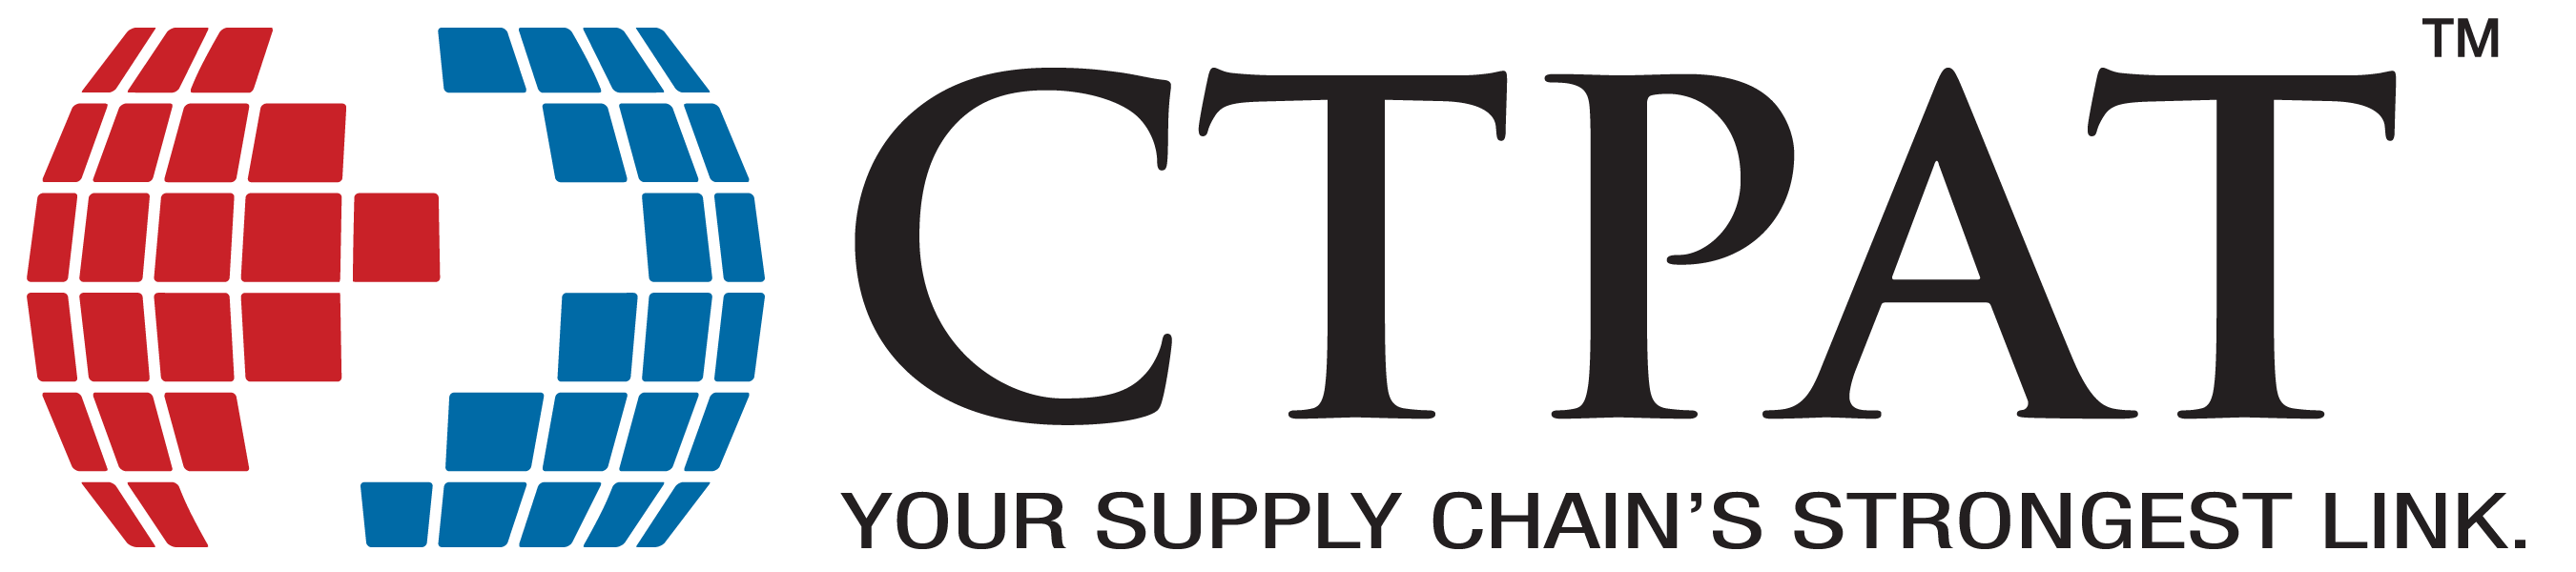 ctpat_logo